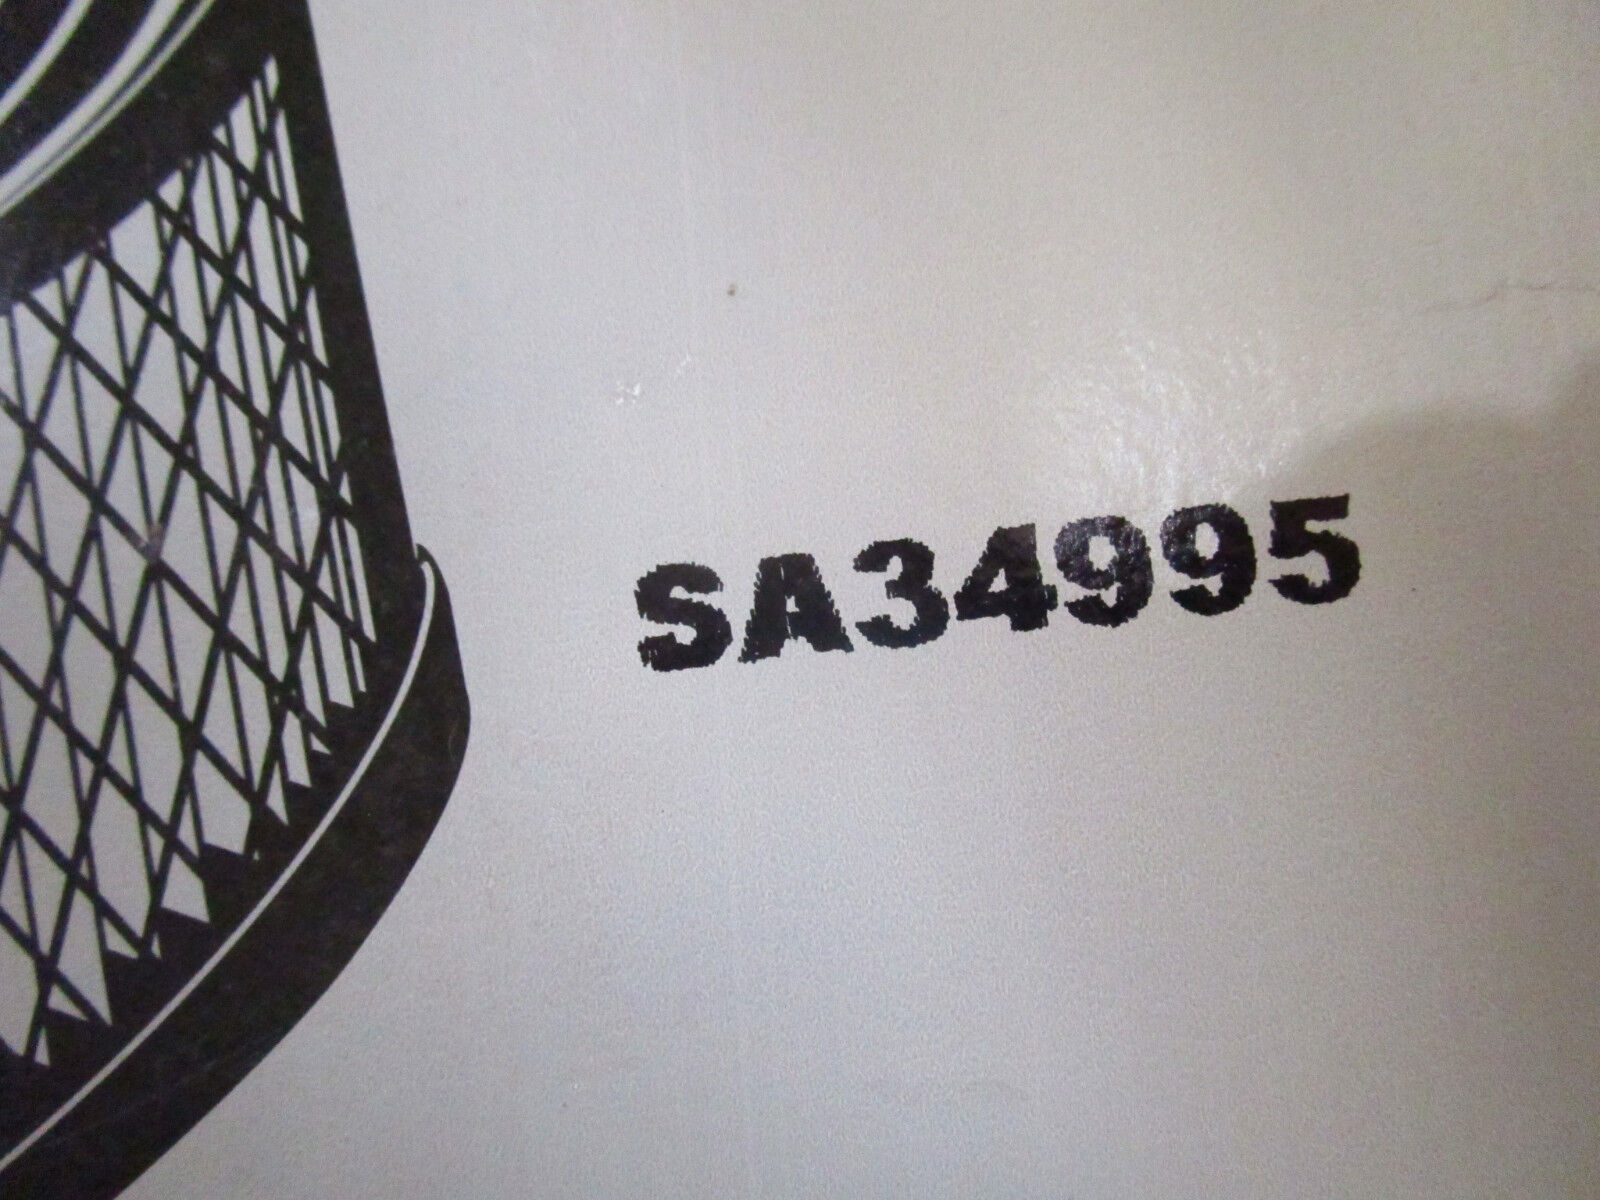 Power Flo SA34995 Air Filter Purolator A34995 for Compatibility VOLKWAGEN